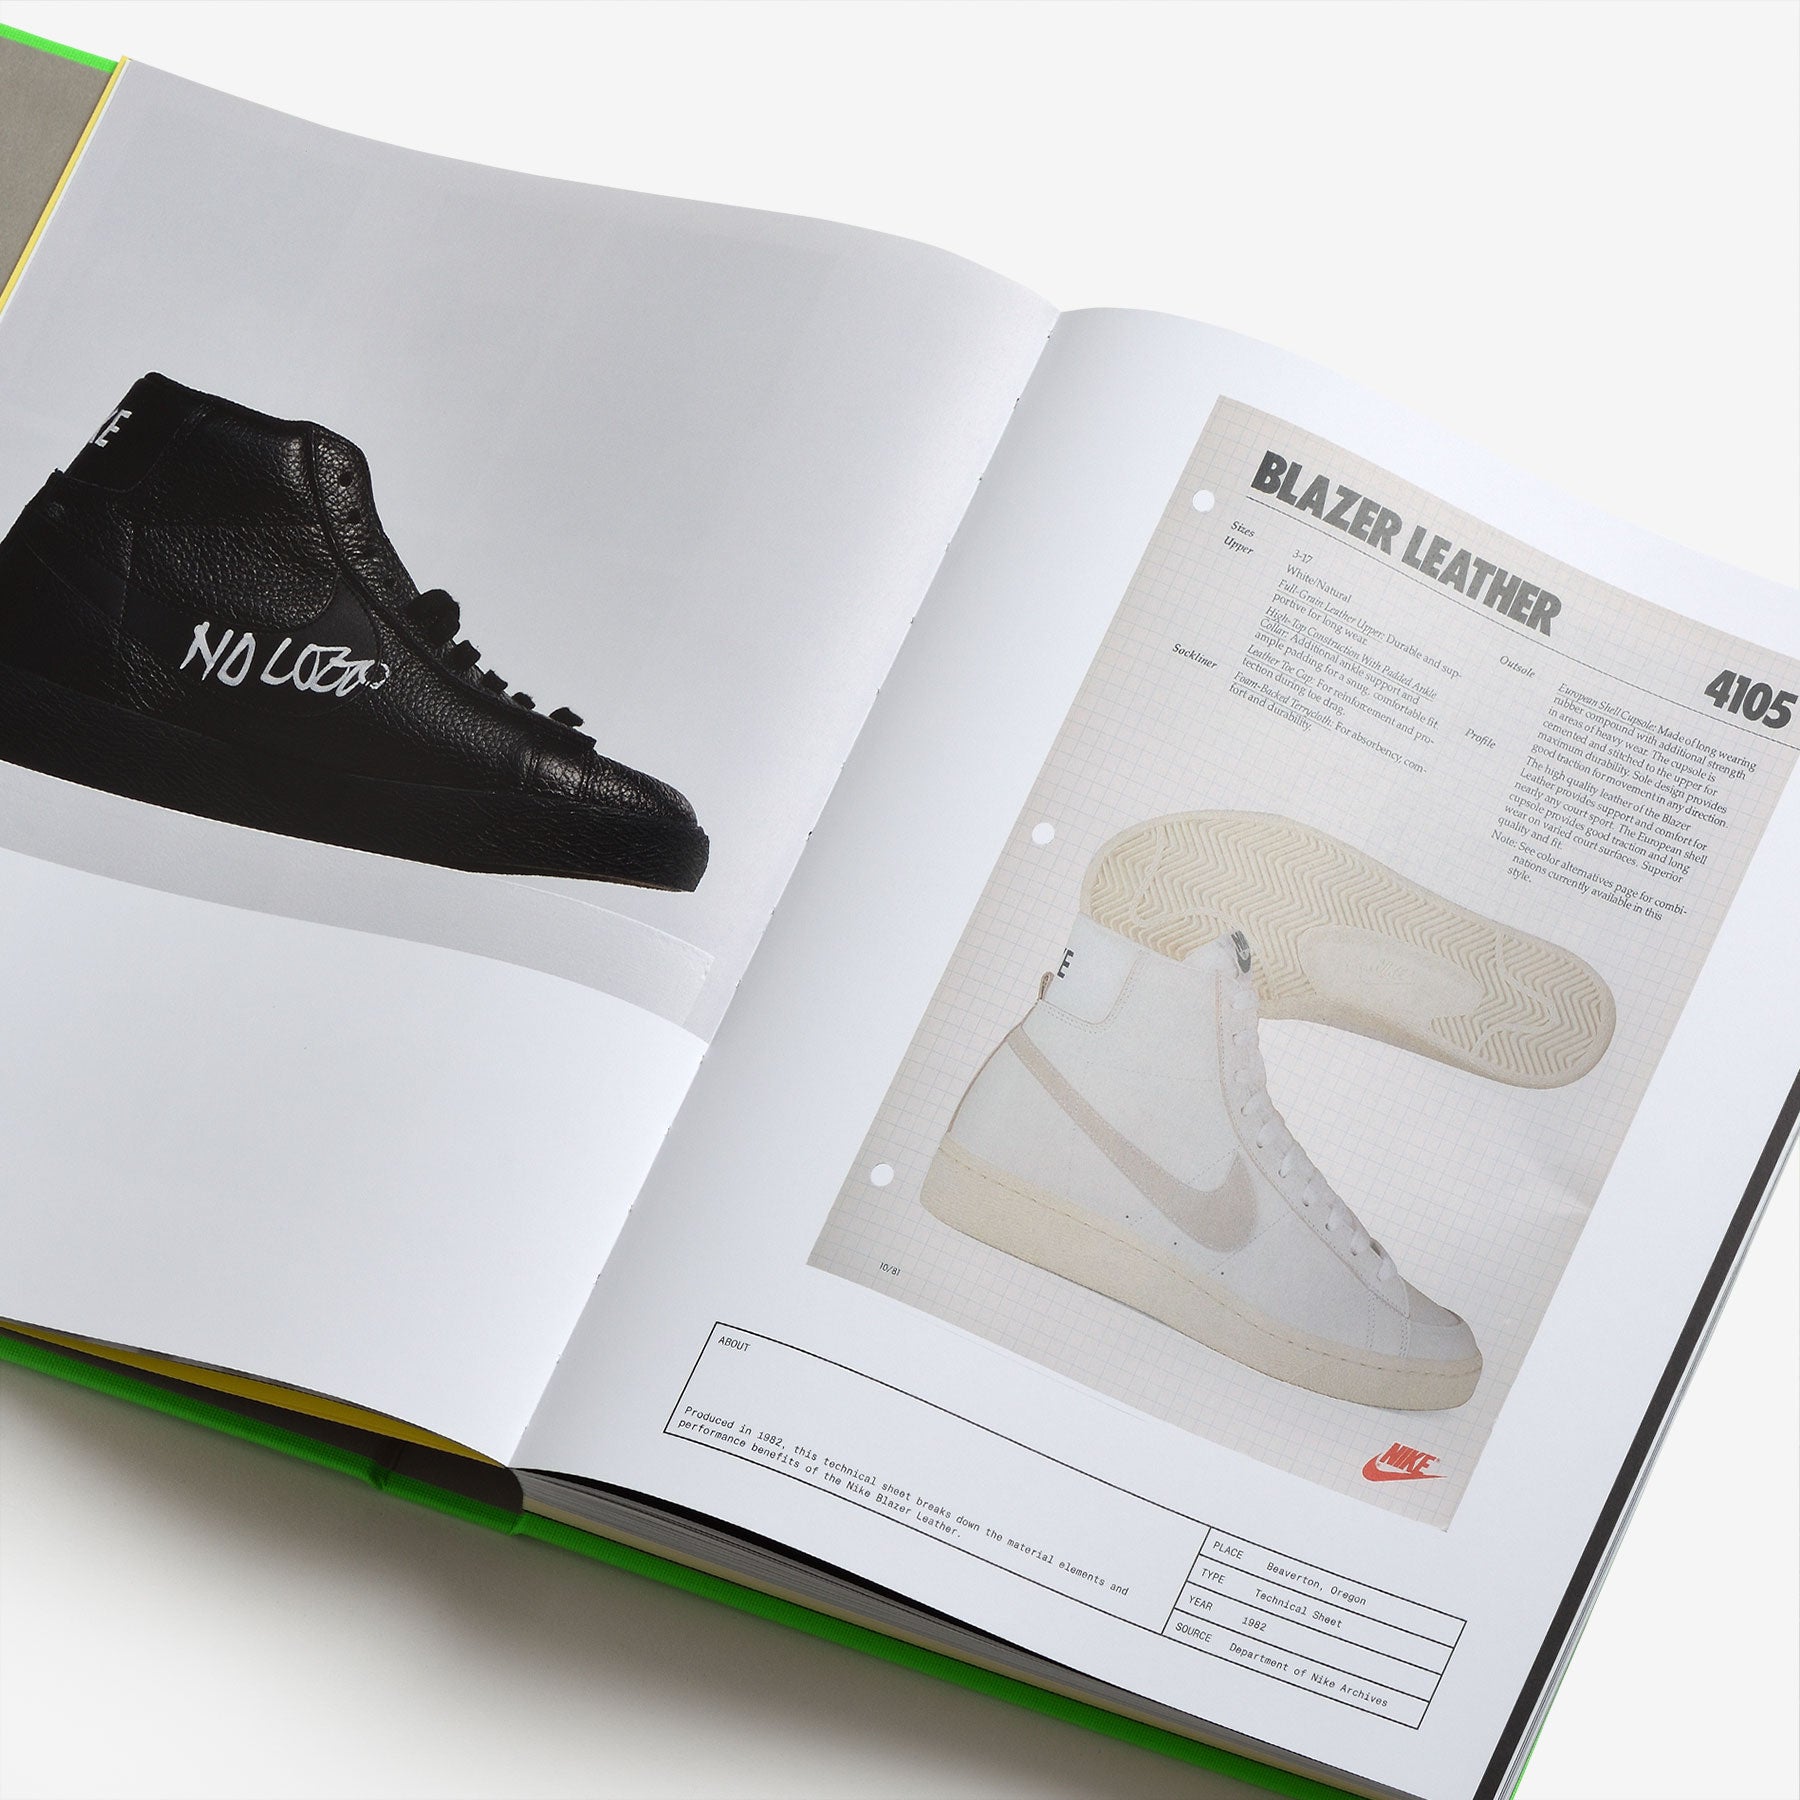 Virgil Abloh Nike ICONS Book in Green - Taschen